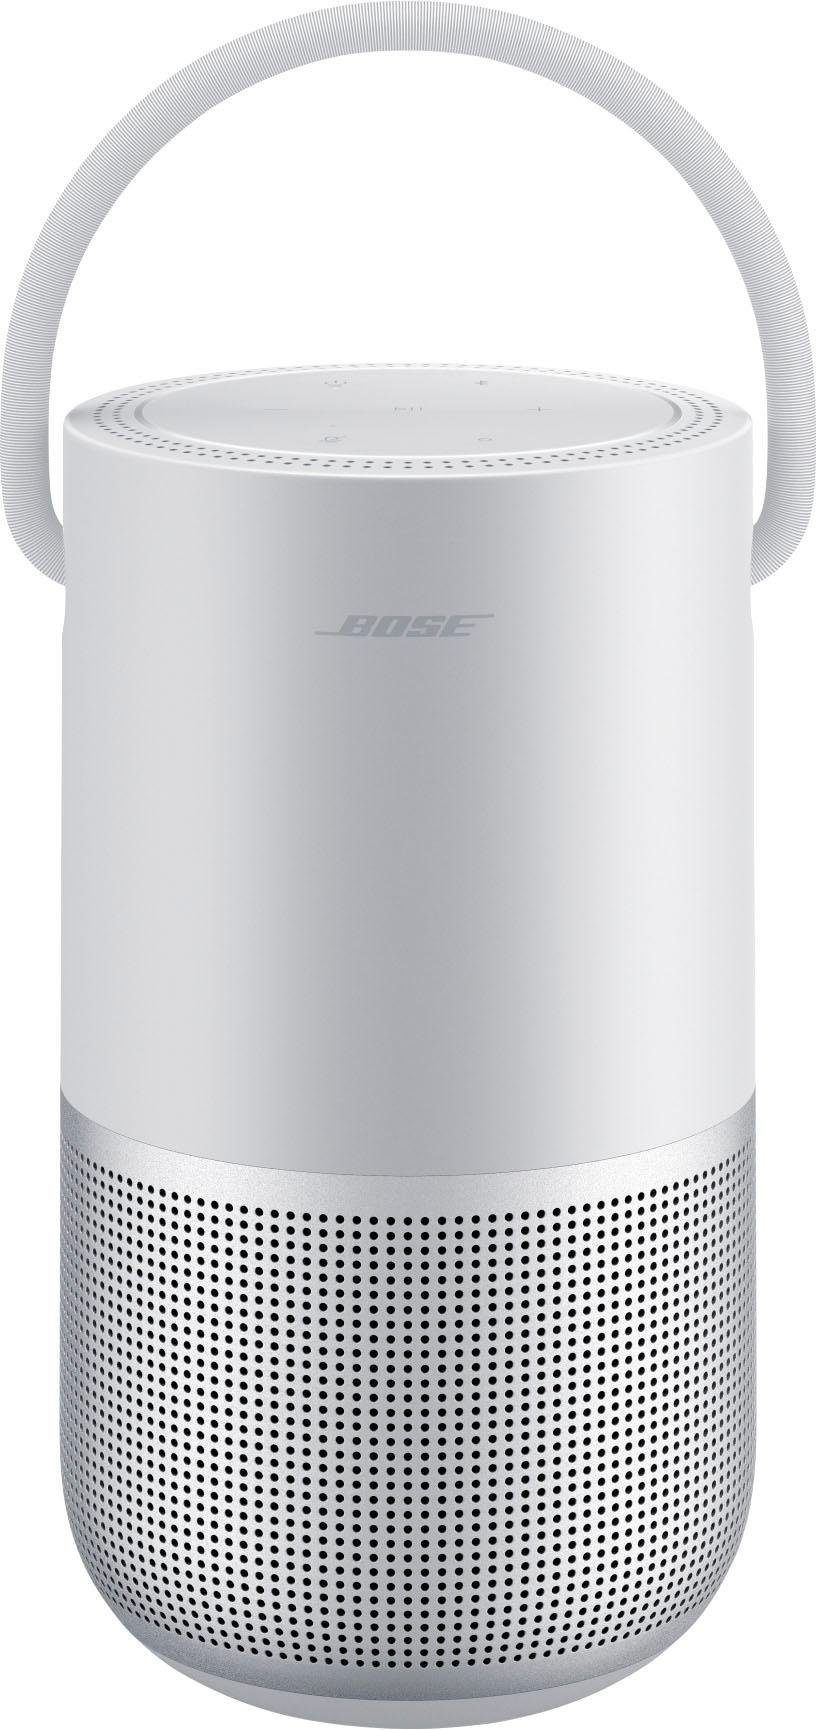 Bose Bluetooth-Lautsprecher »Portable Home Speaker«, AirPlay 2, wasserabweisend, kraftvoller 360°-Klang, Multiroom